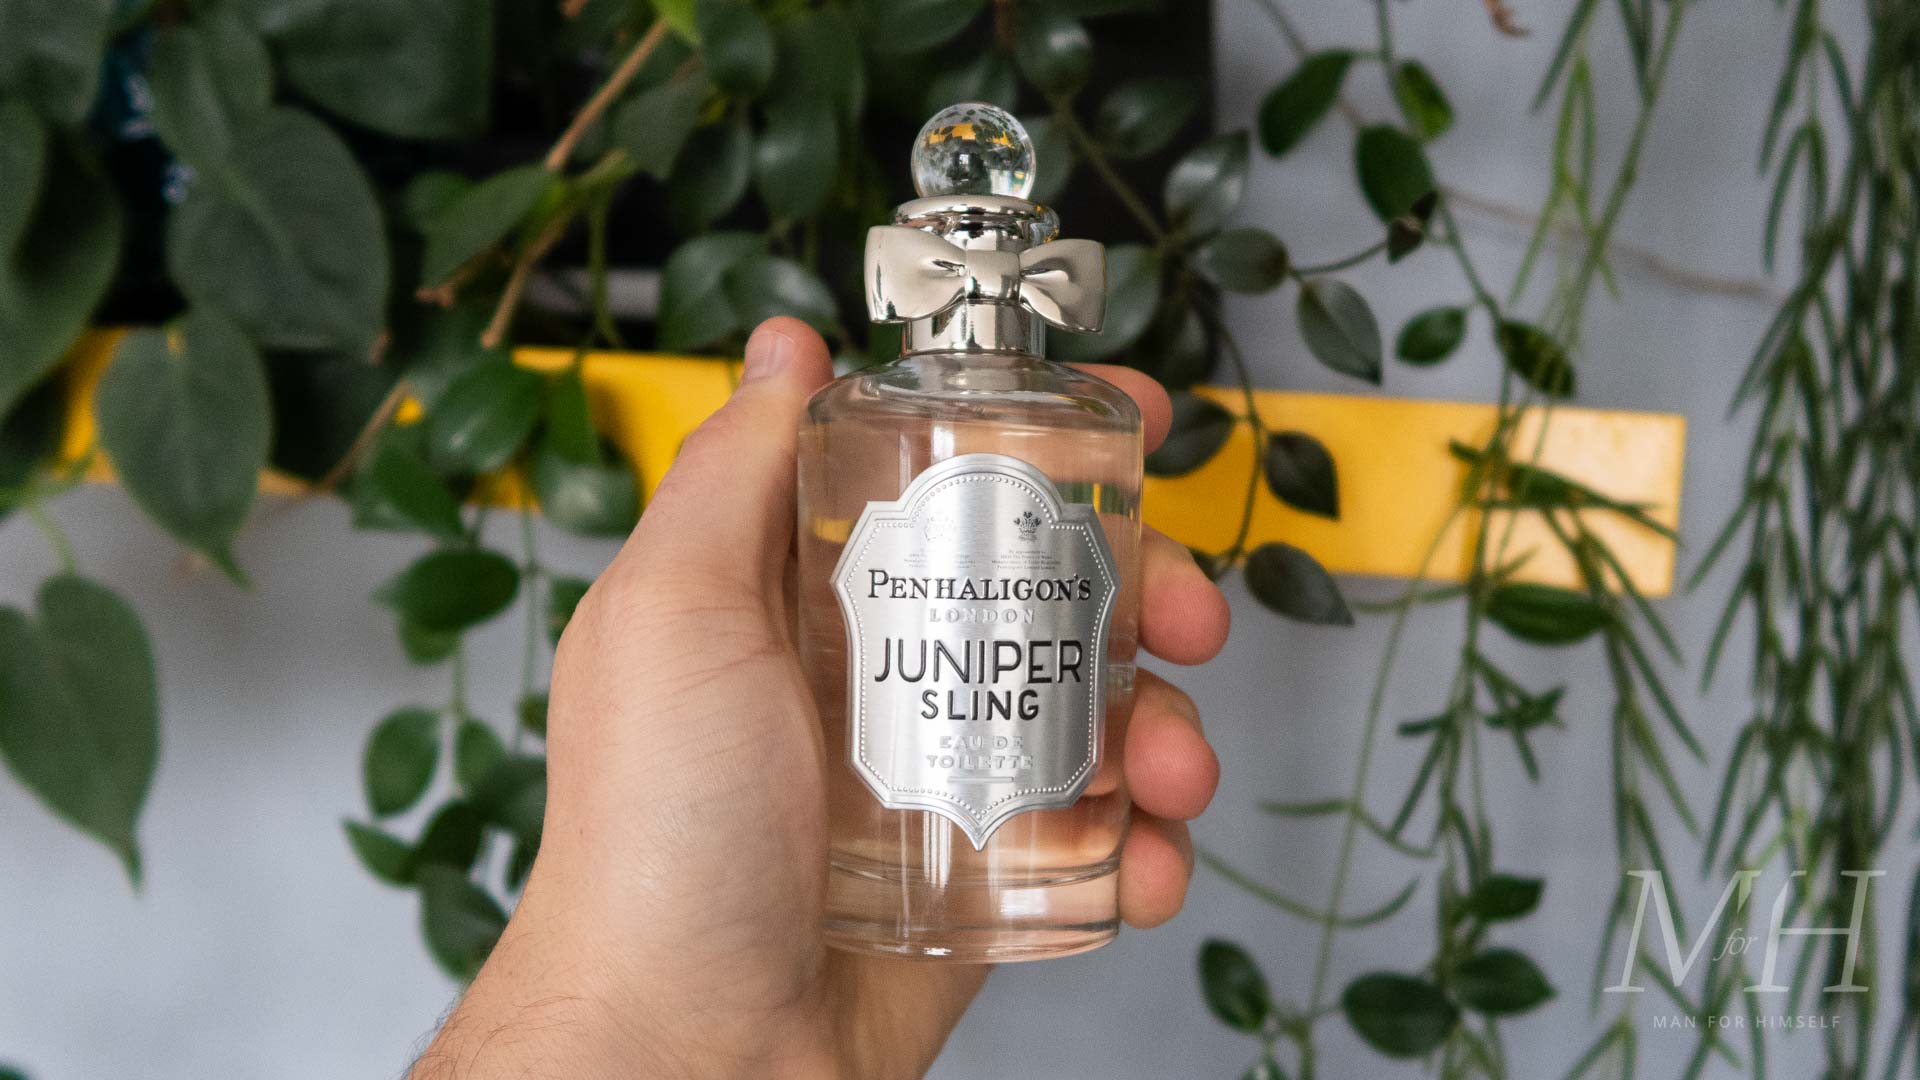 penhaligons-juniper-sling-fragrance-grooming-product-review-man-for-himself.